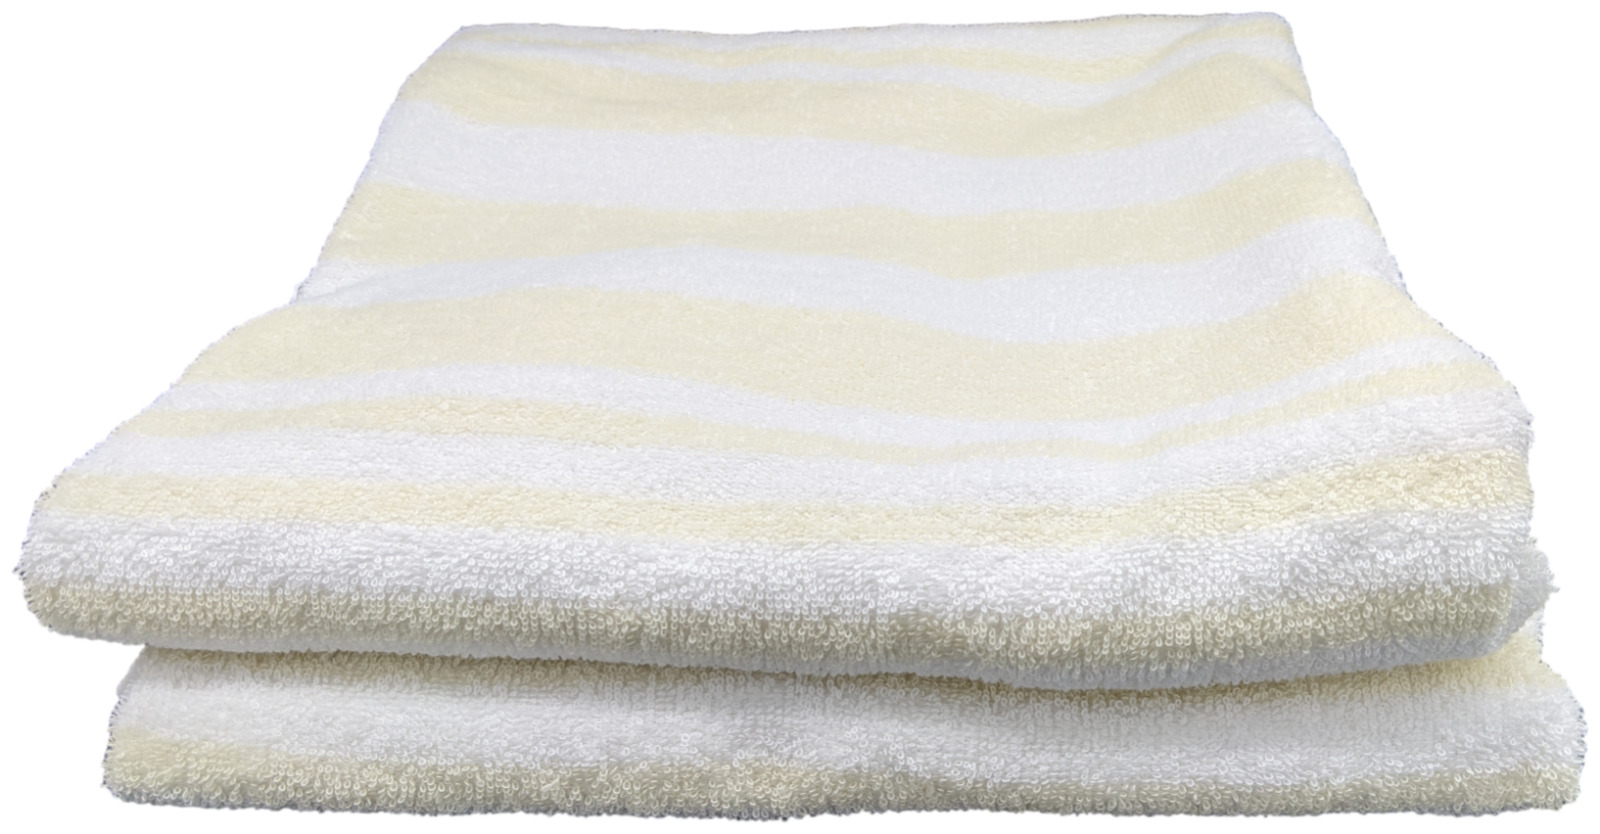 3 - Hotel & Spa Pool Beach Towels 100% Ring Spun Cotton Yellow/White Striped